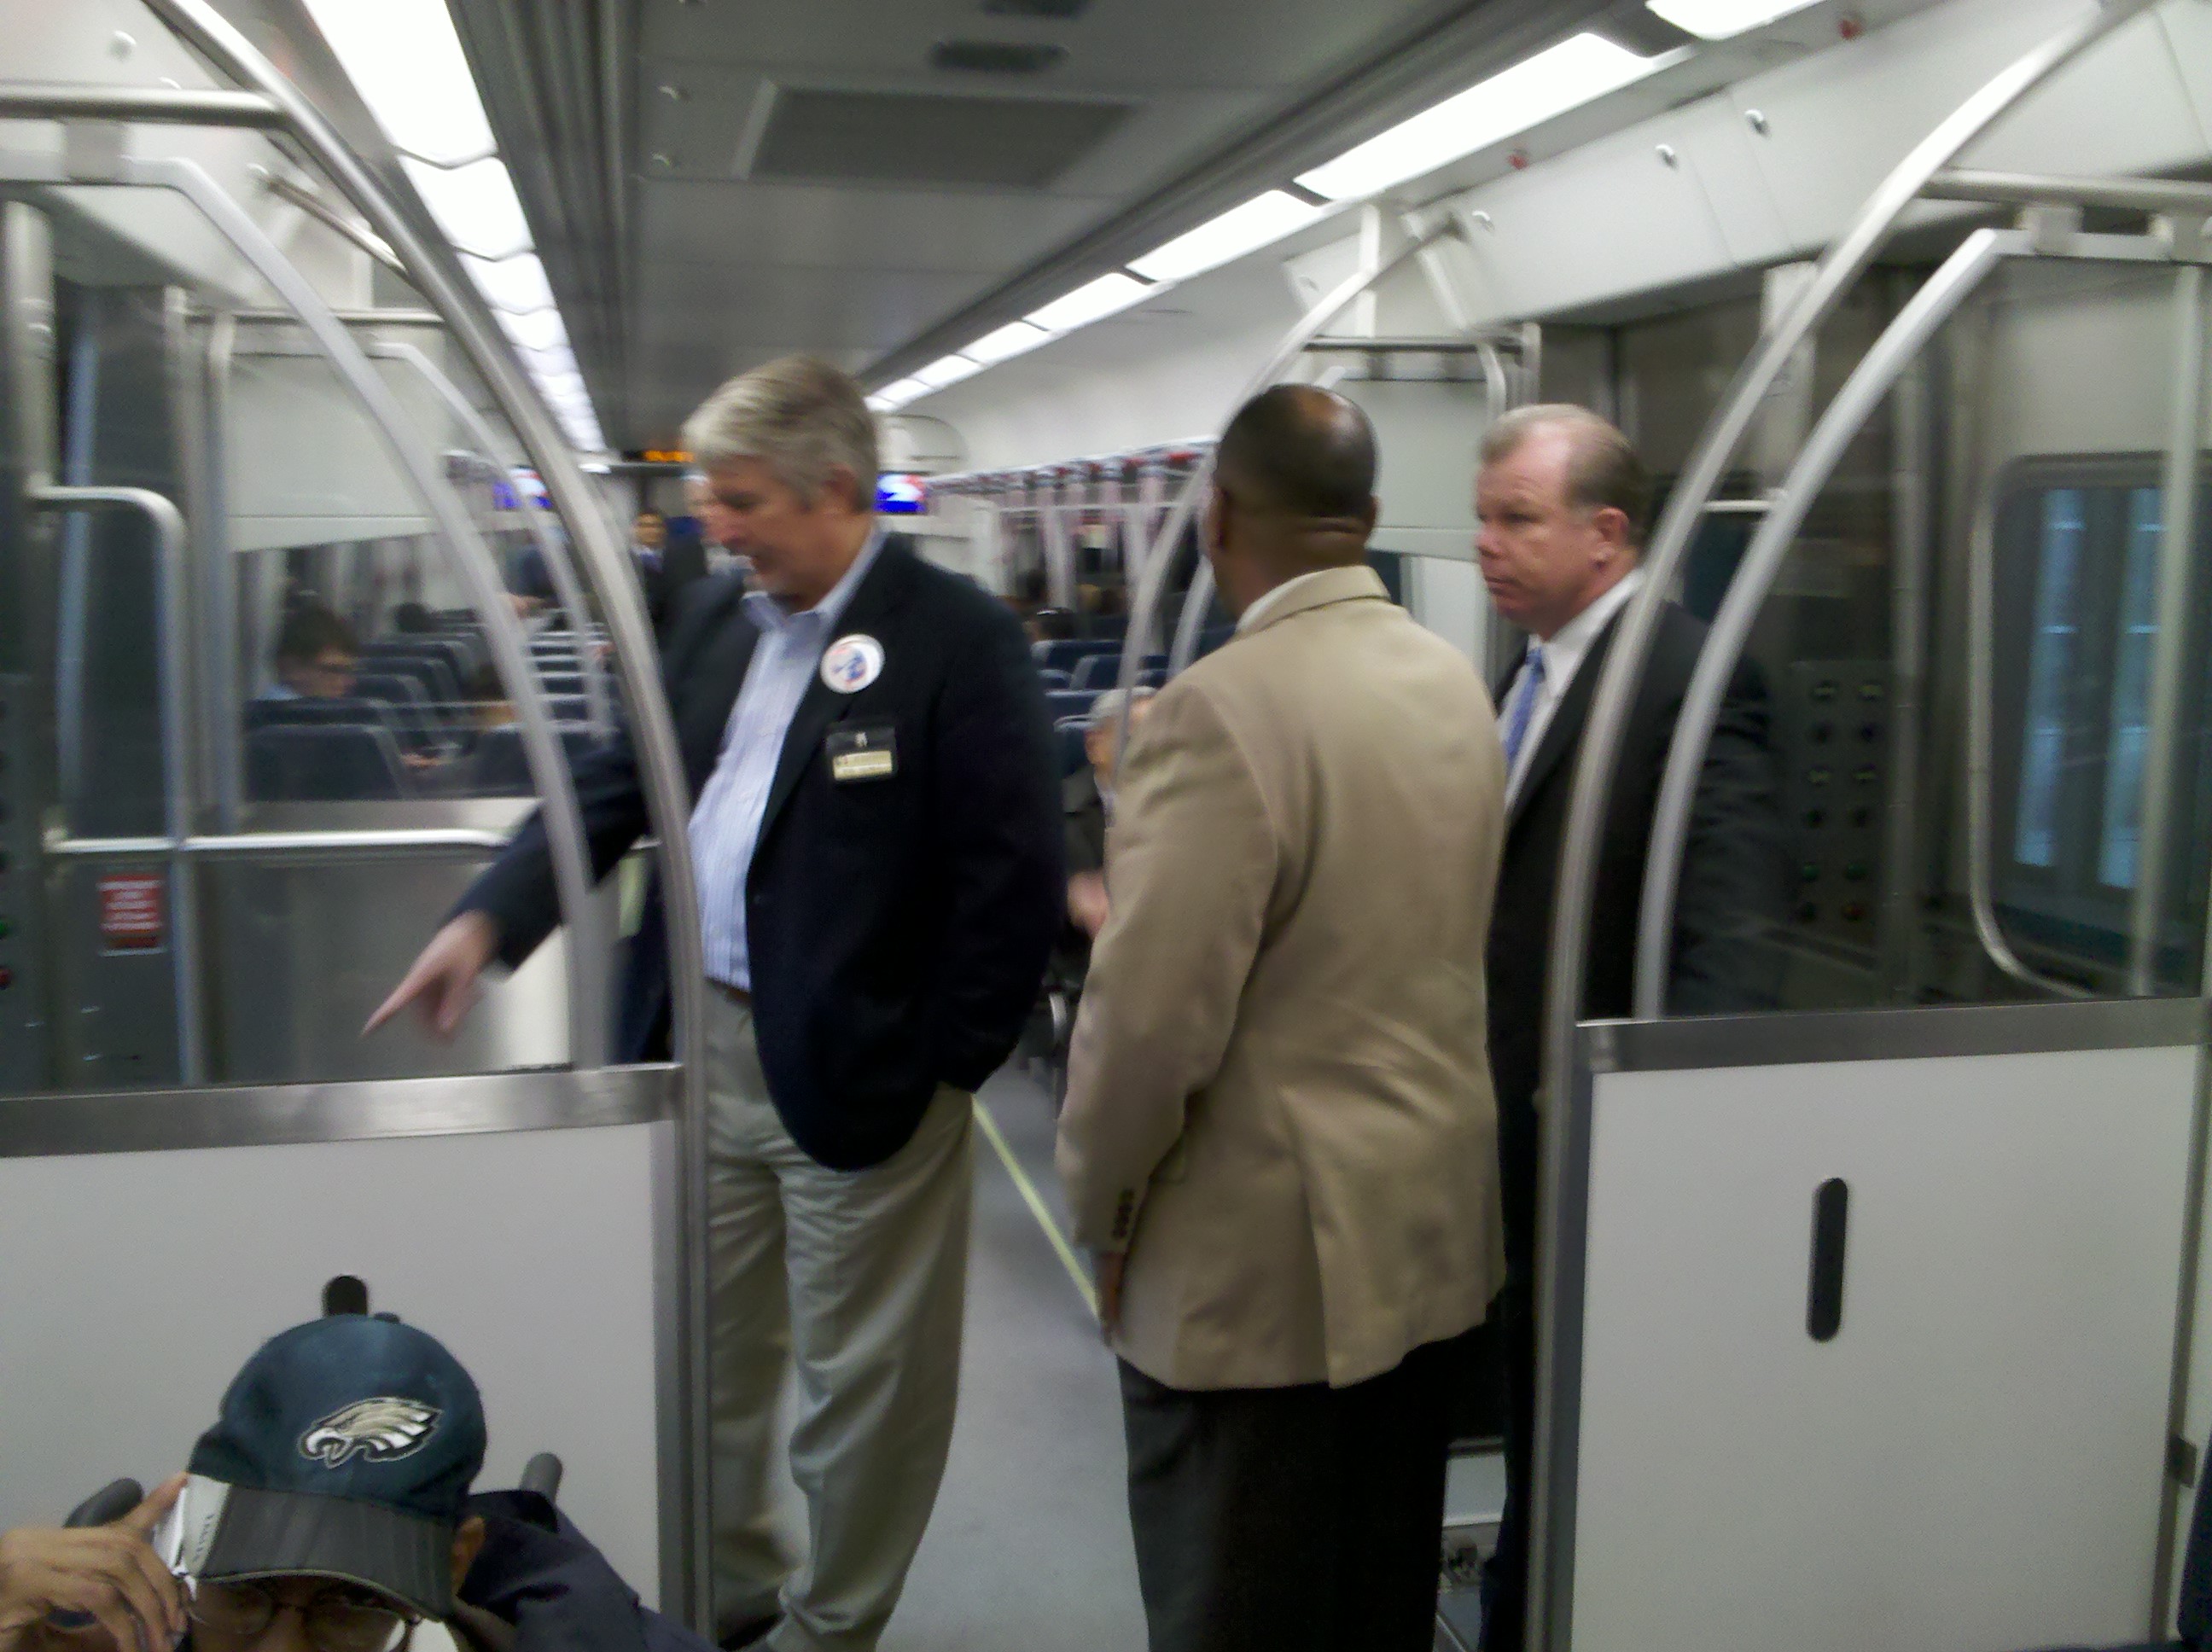 SEPTA officials inspecting the Silverliner V doors.